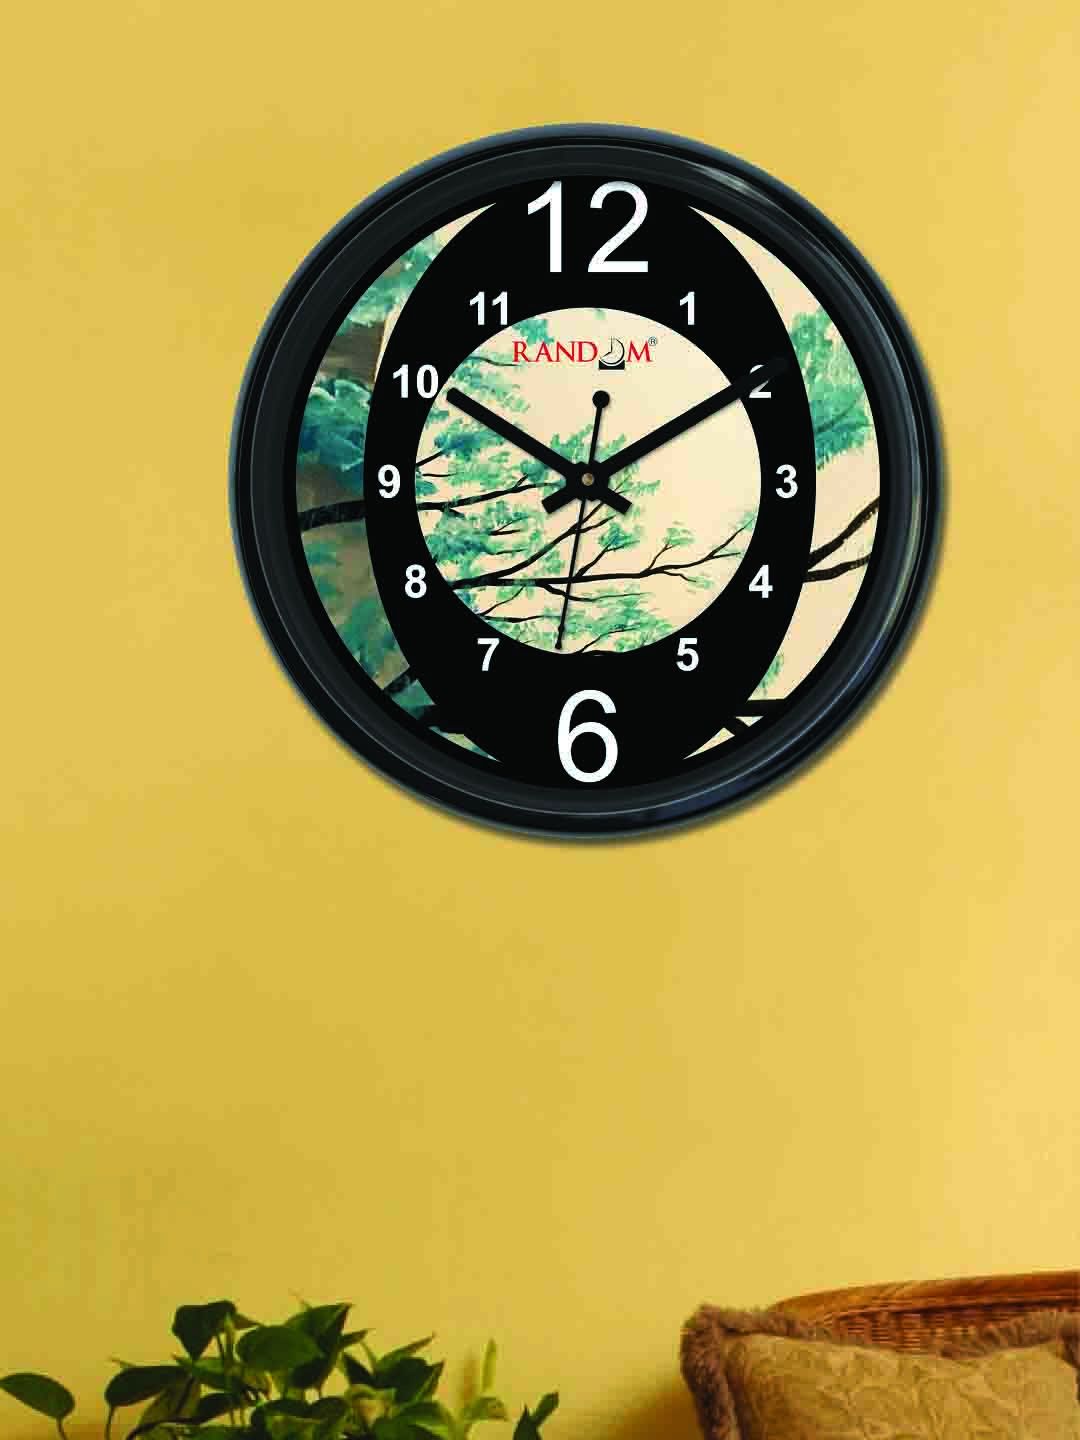 RANDOM Black Round Printed Analogue Wall Clock Price in India